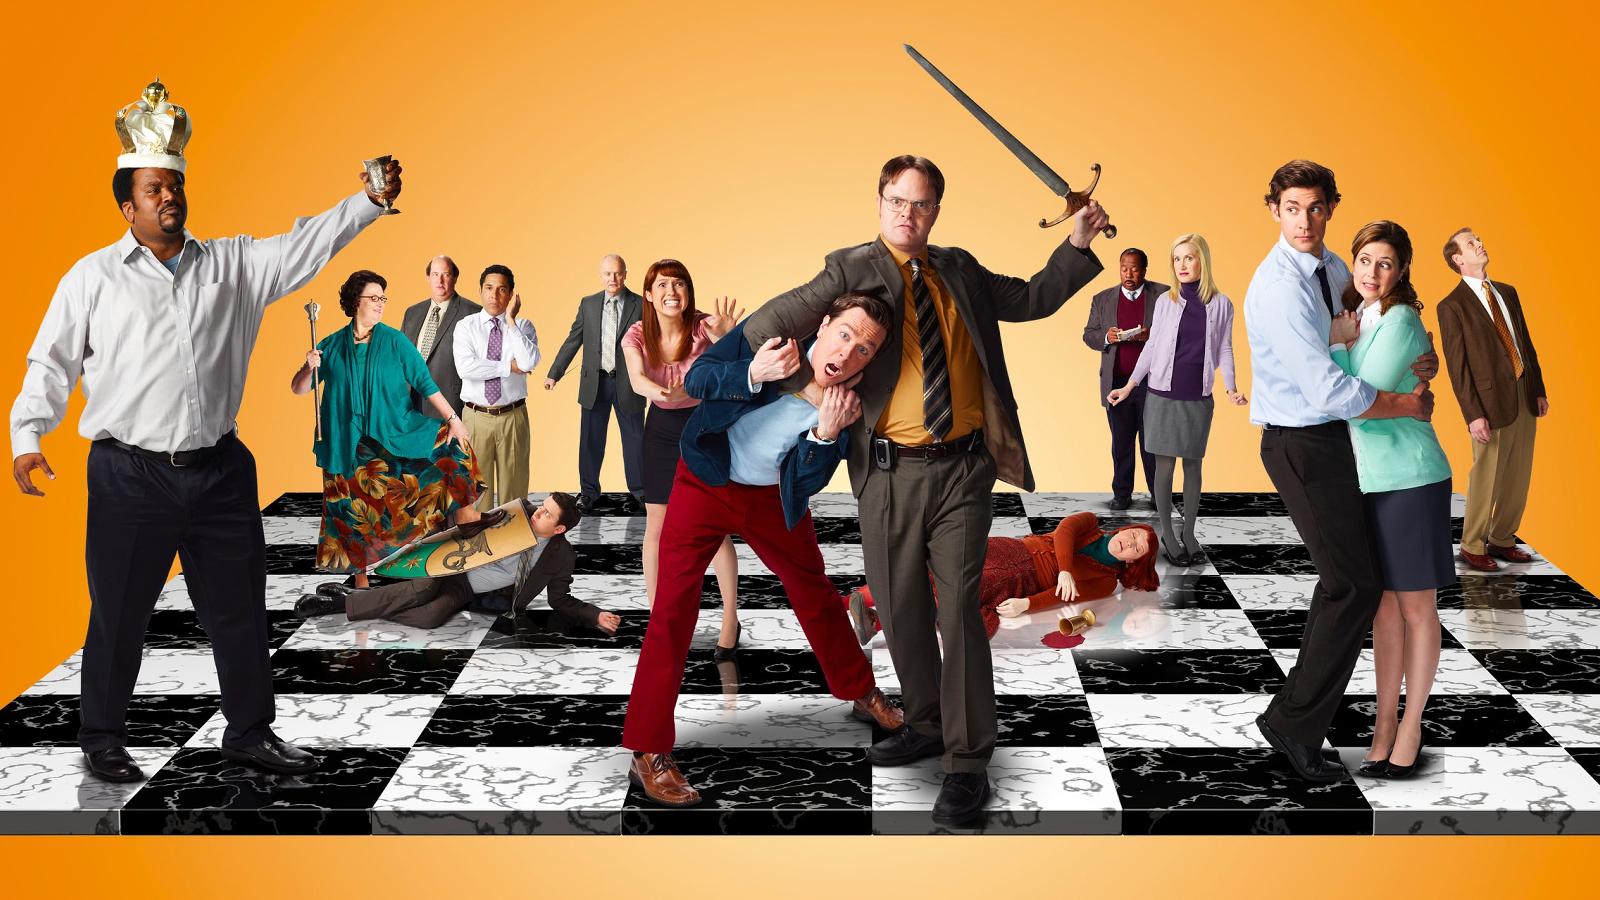 Promotional artwork for The Office Season 9